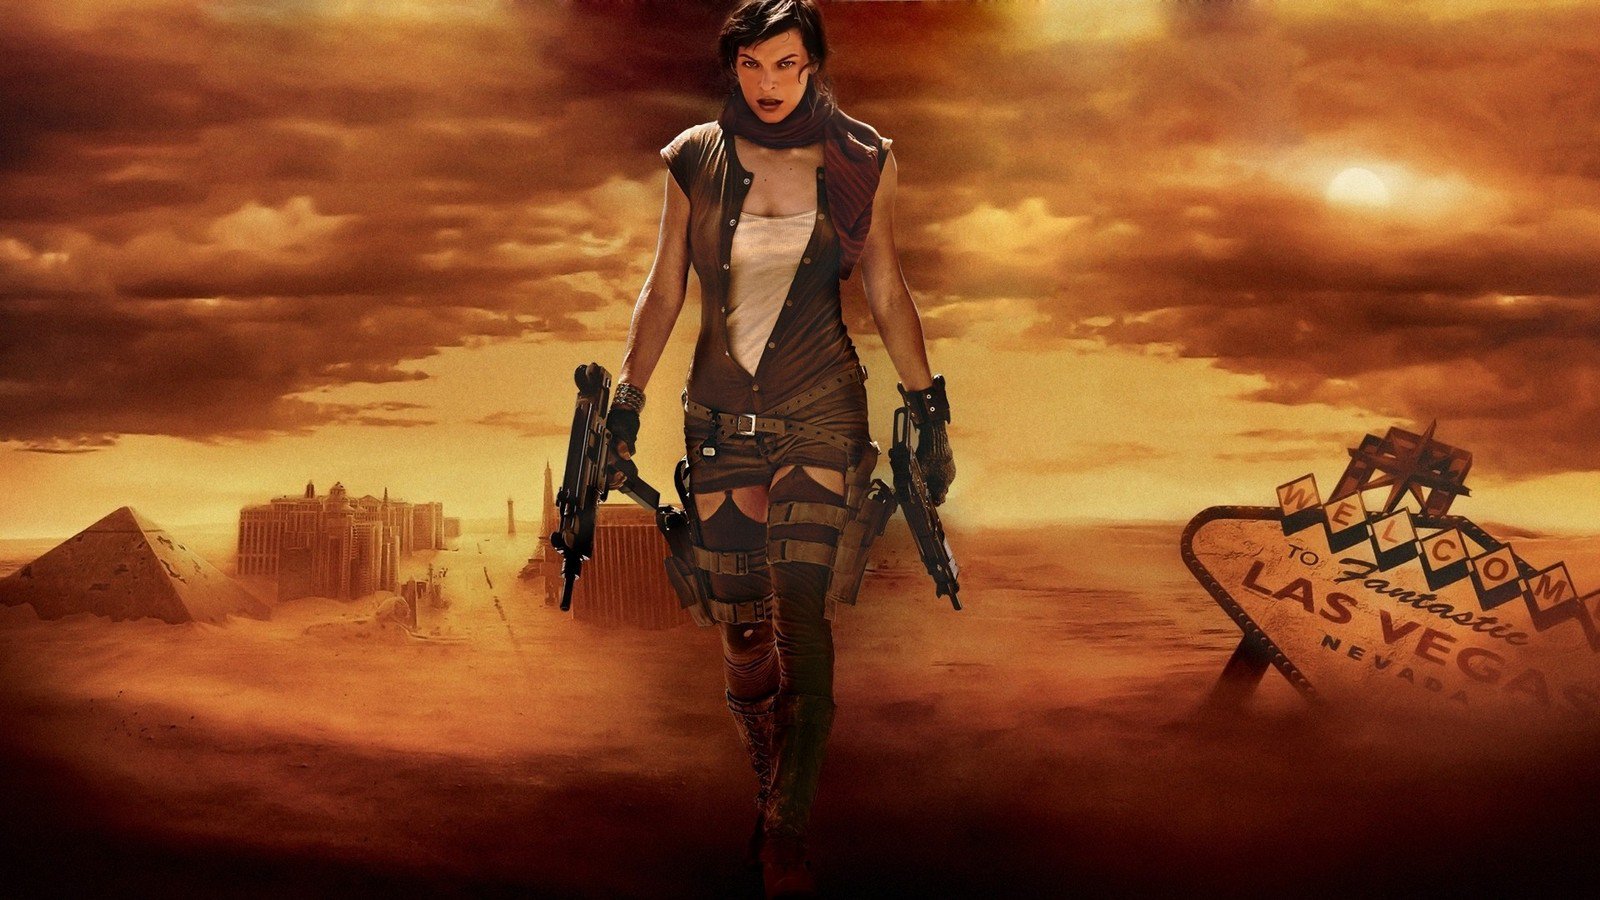 High Resolution Wallpaper | Resident Evil: Extinction 1600x900 px